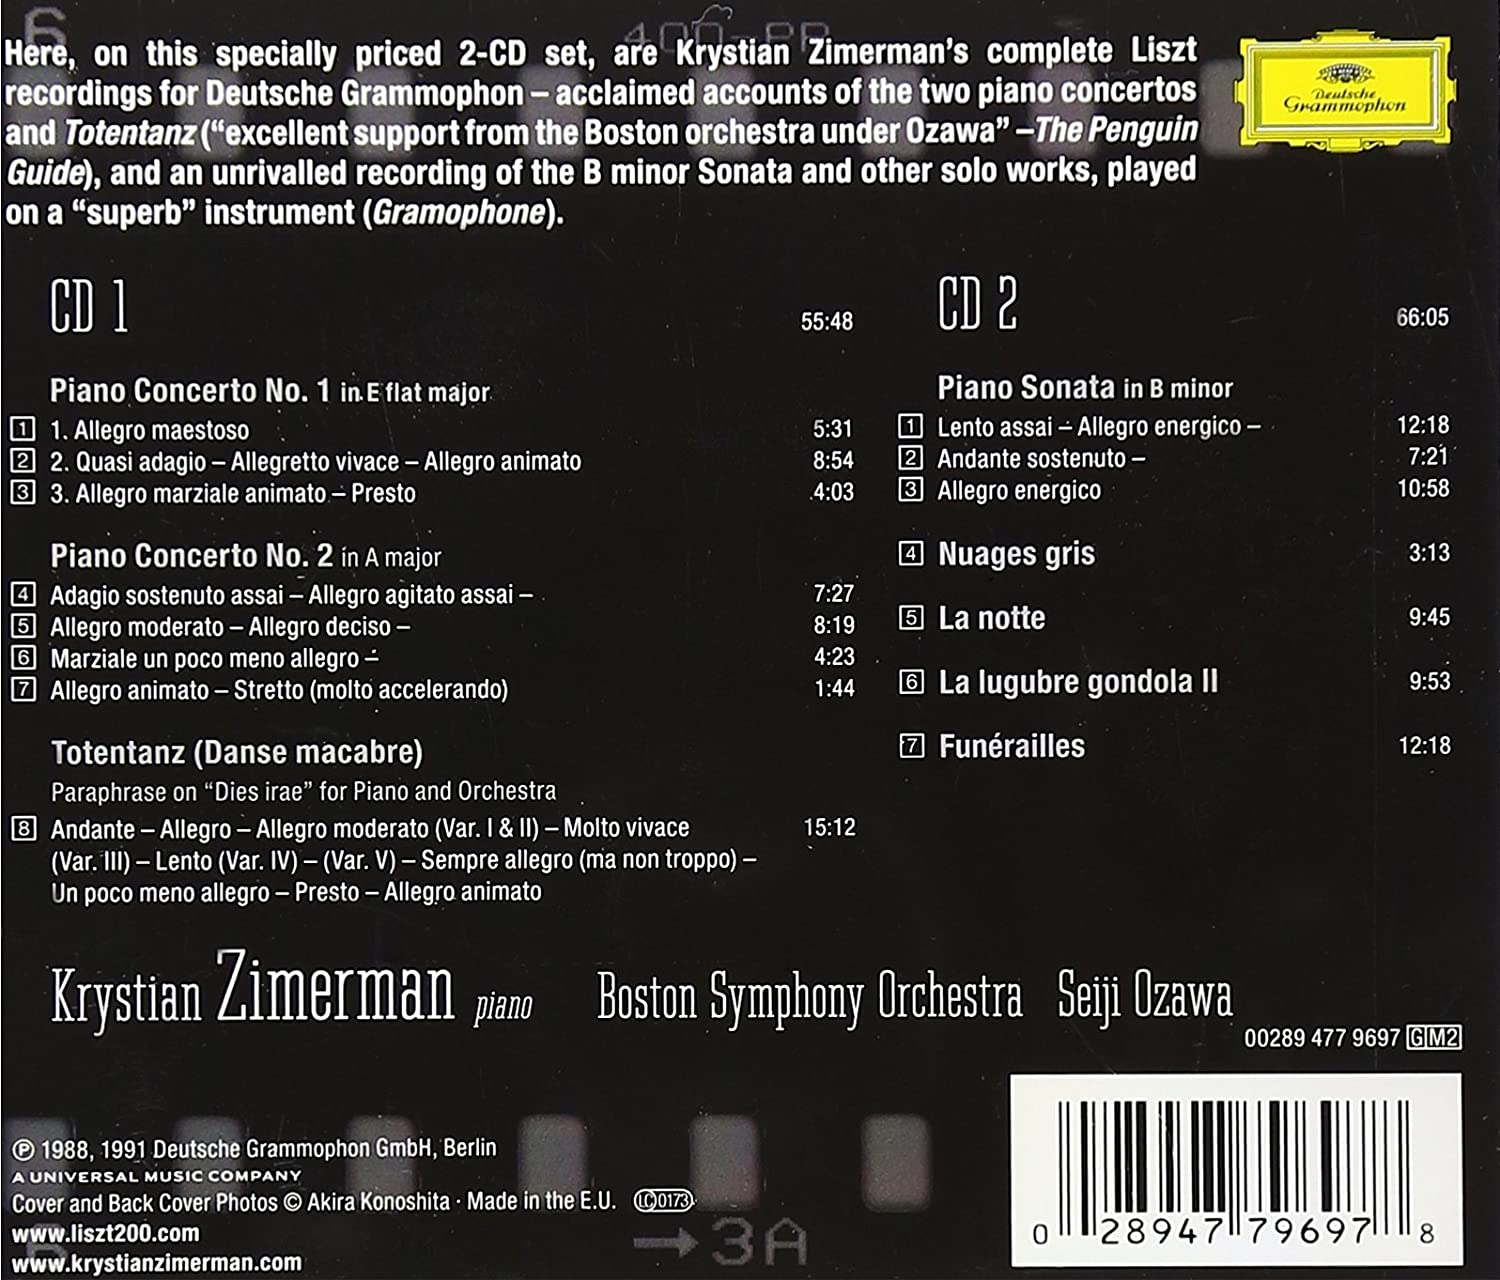 Zimerman: The Liszt Recordings | Krystian Zimerman, Boston Symphony Orchestra, Seiji Ozawa image1